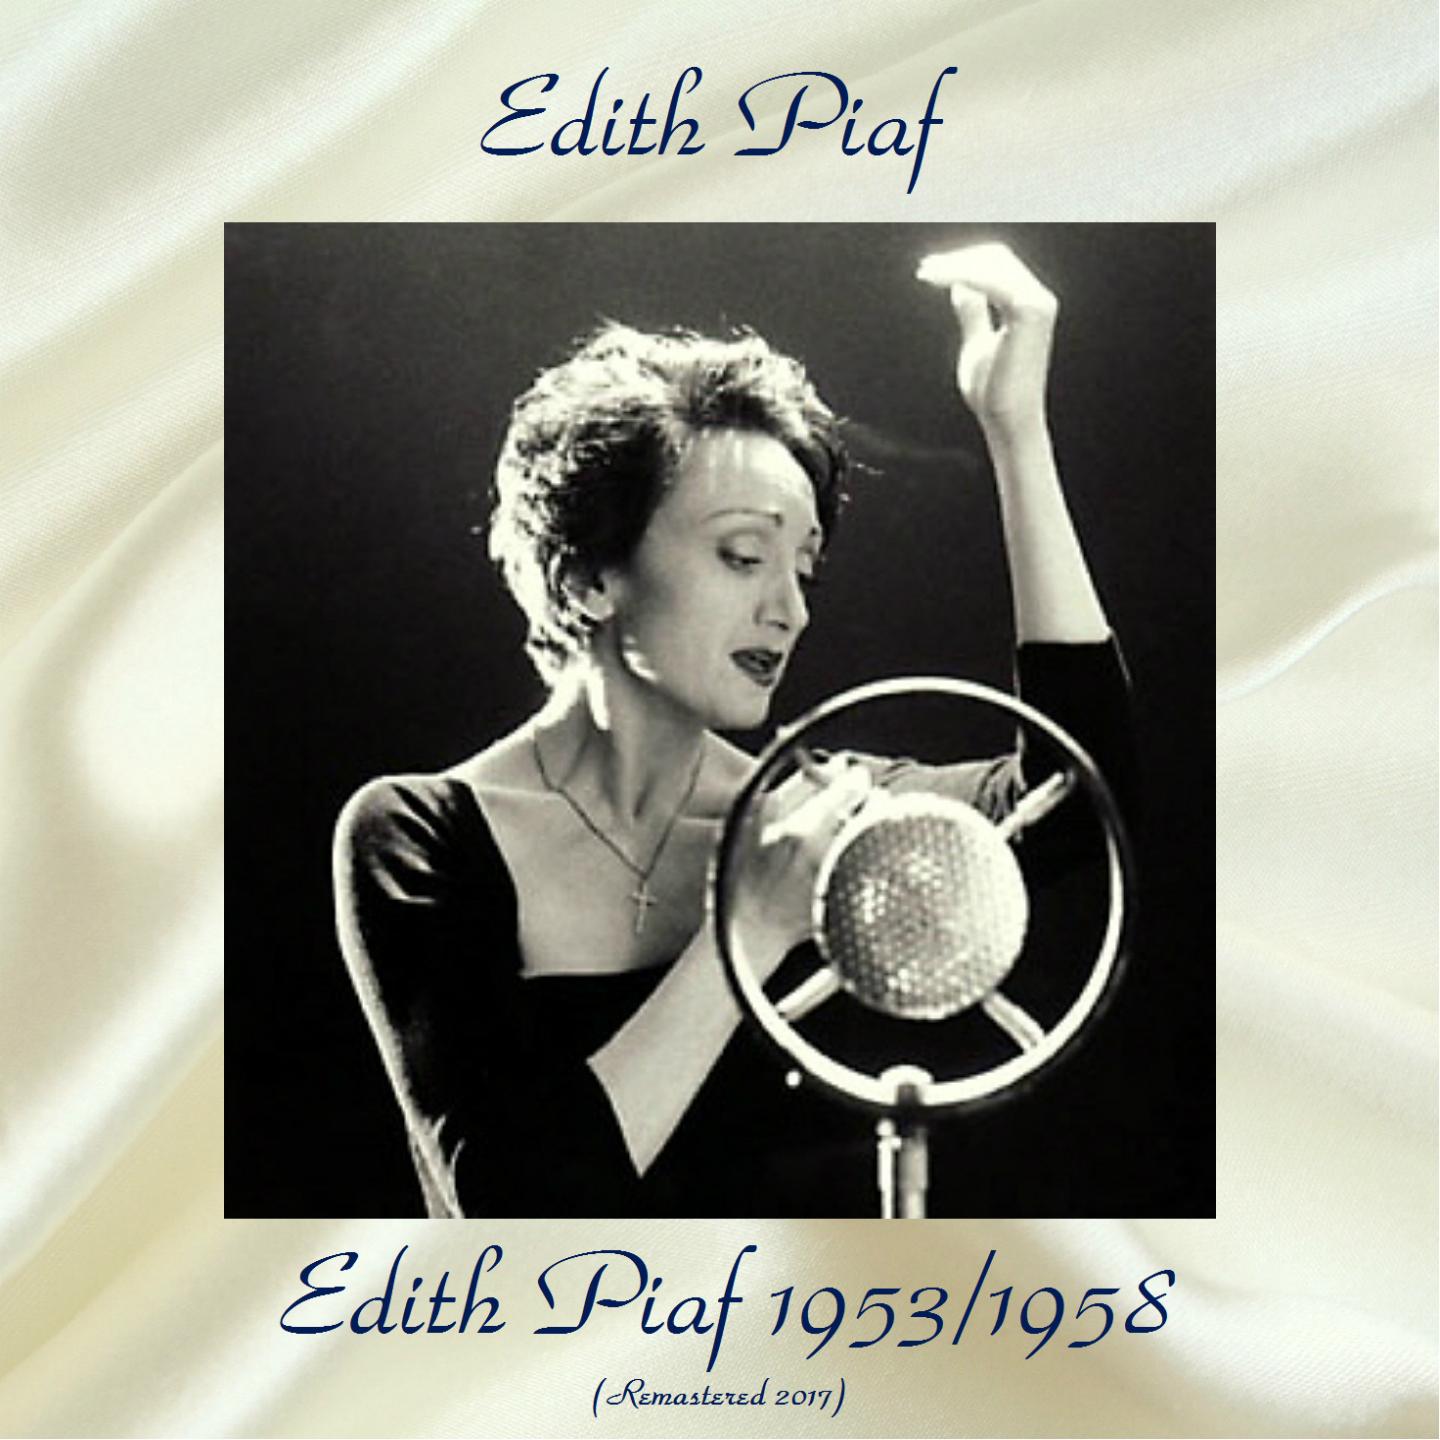 Edith Piaf 1953/1958 (Remastered 2017)